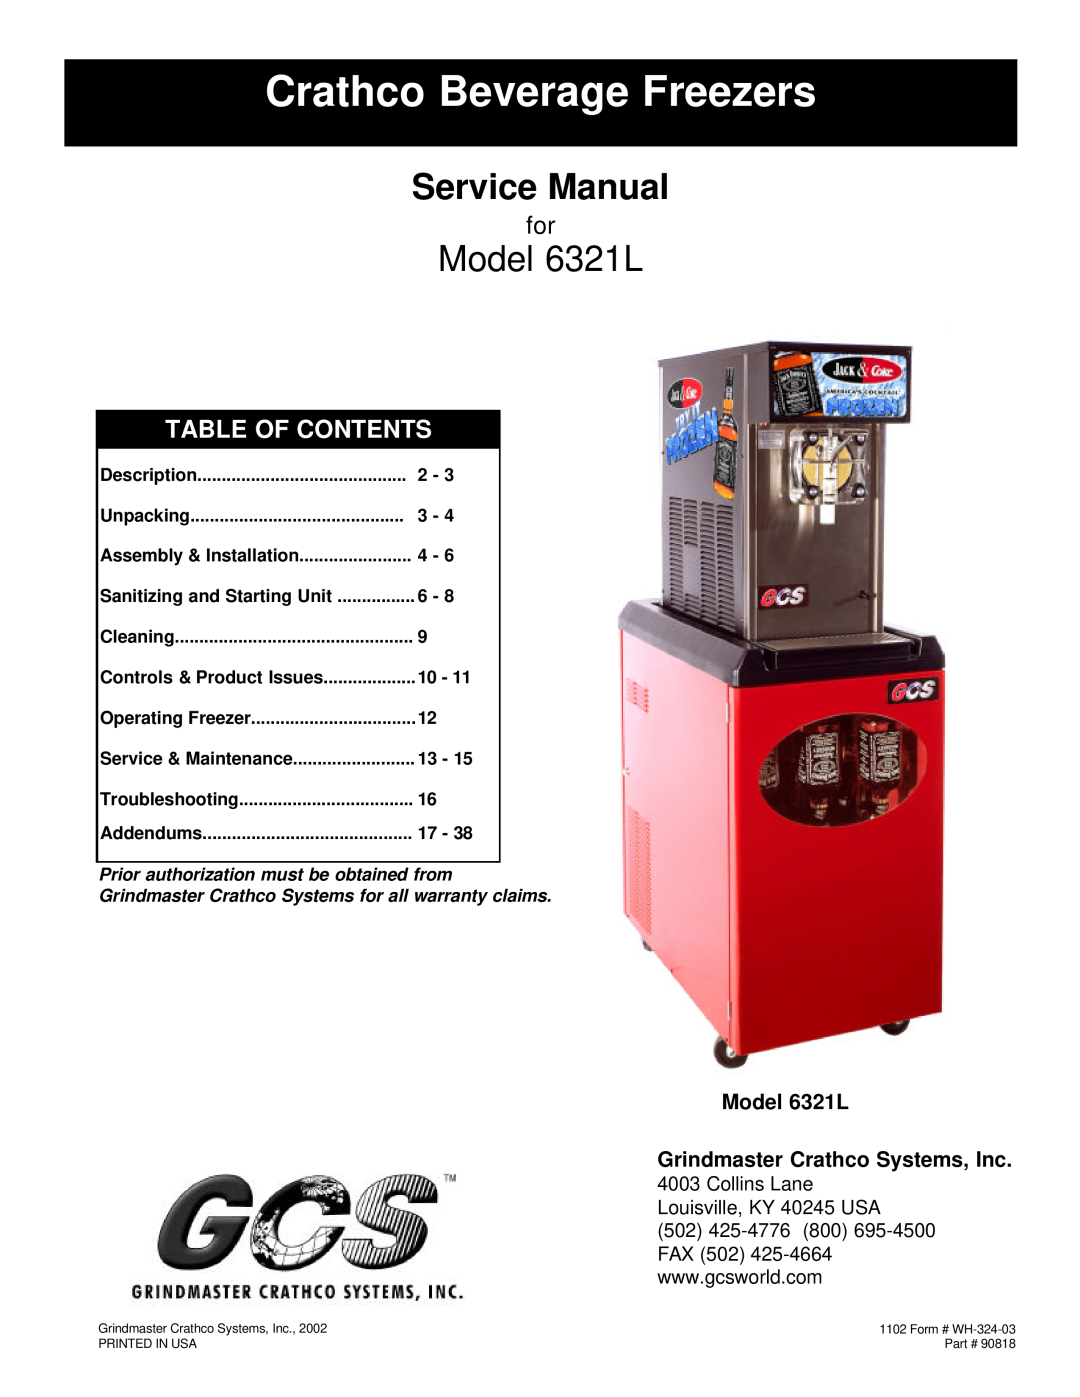 Grindmaster service manual Model 6321L Grindmaster Crathco Systems, Inc, Assembly & Installation, Service Manual, 90818 